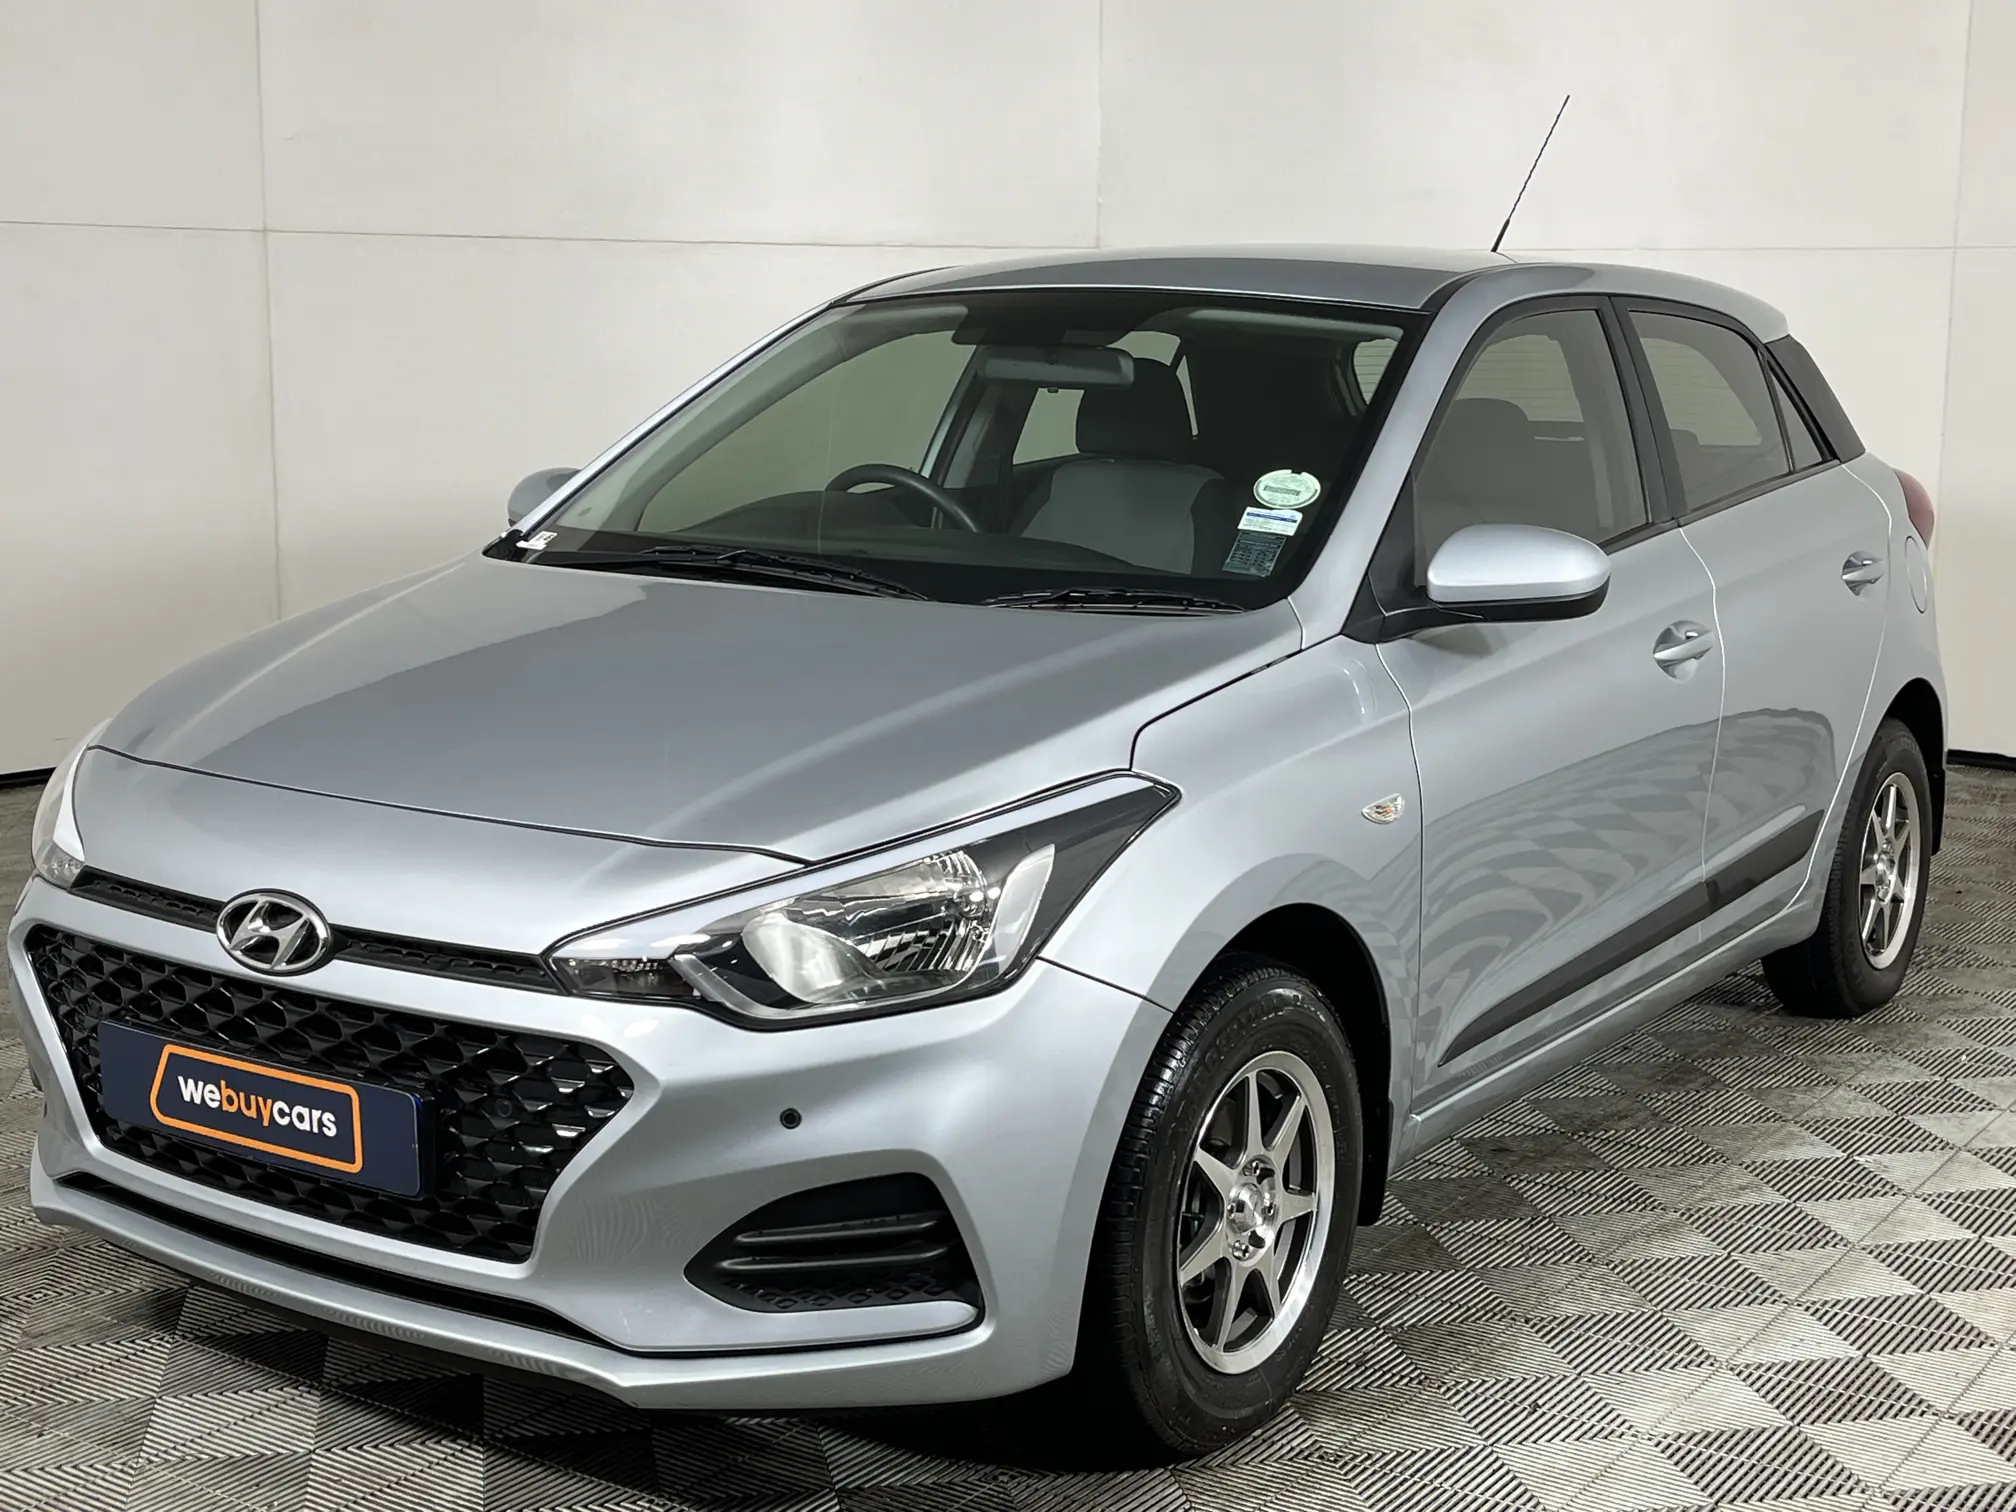 2020 Hyundai i20 1.4 Motion Auto